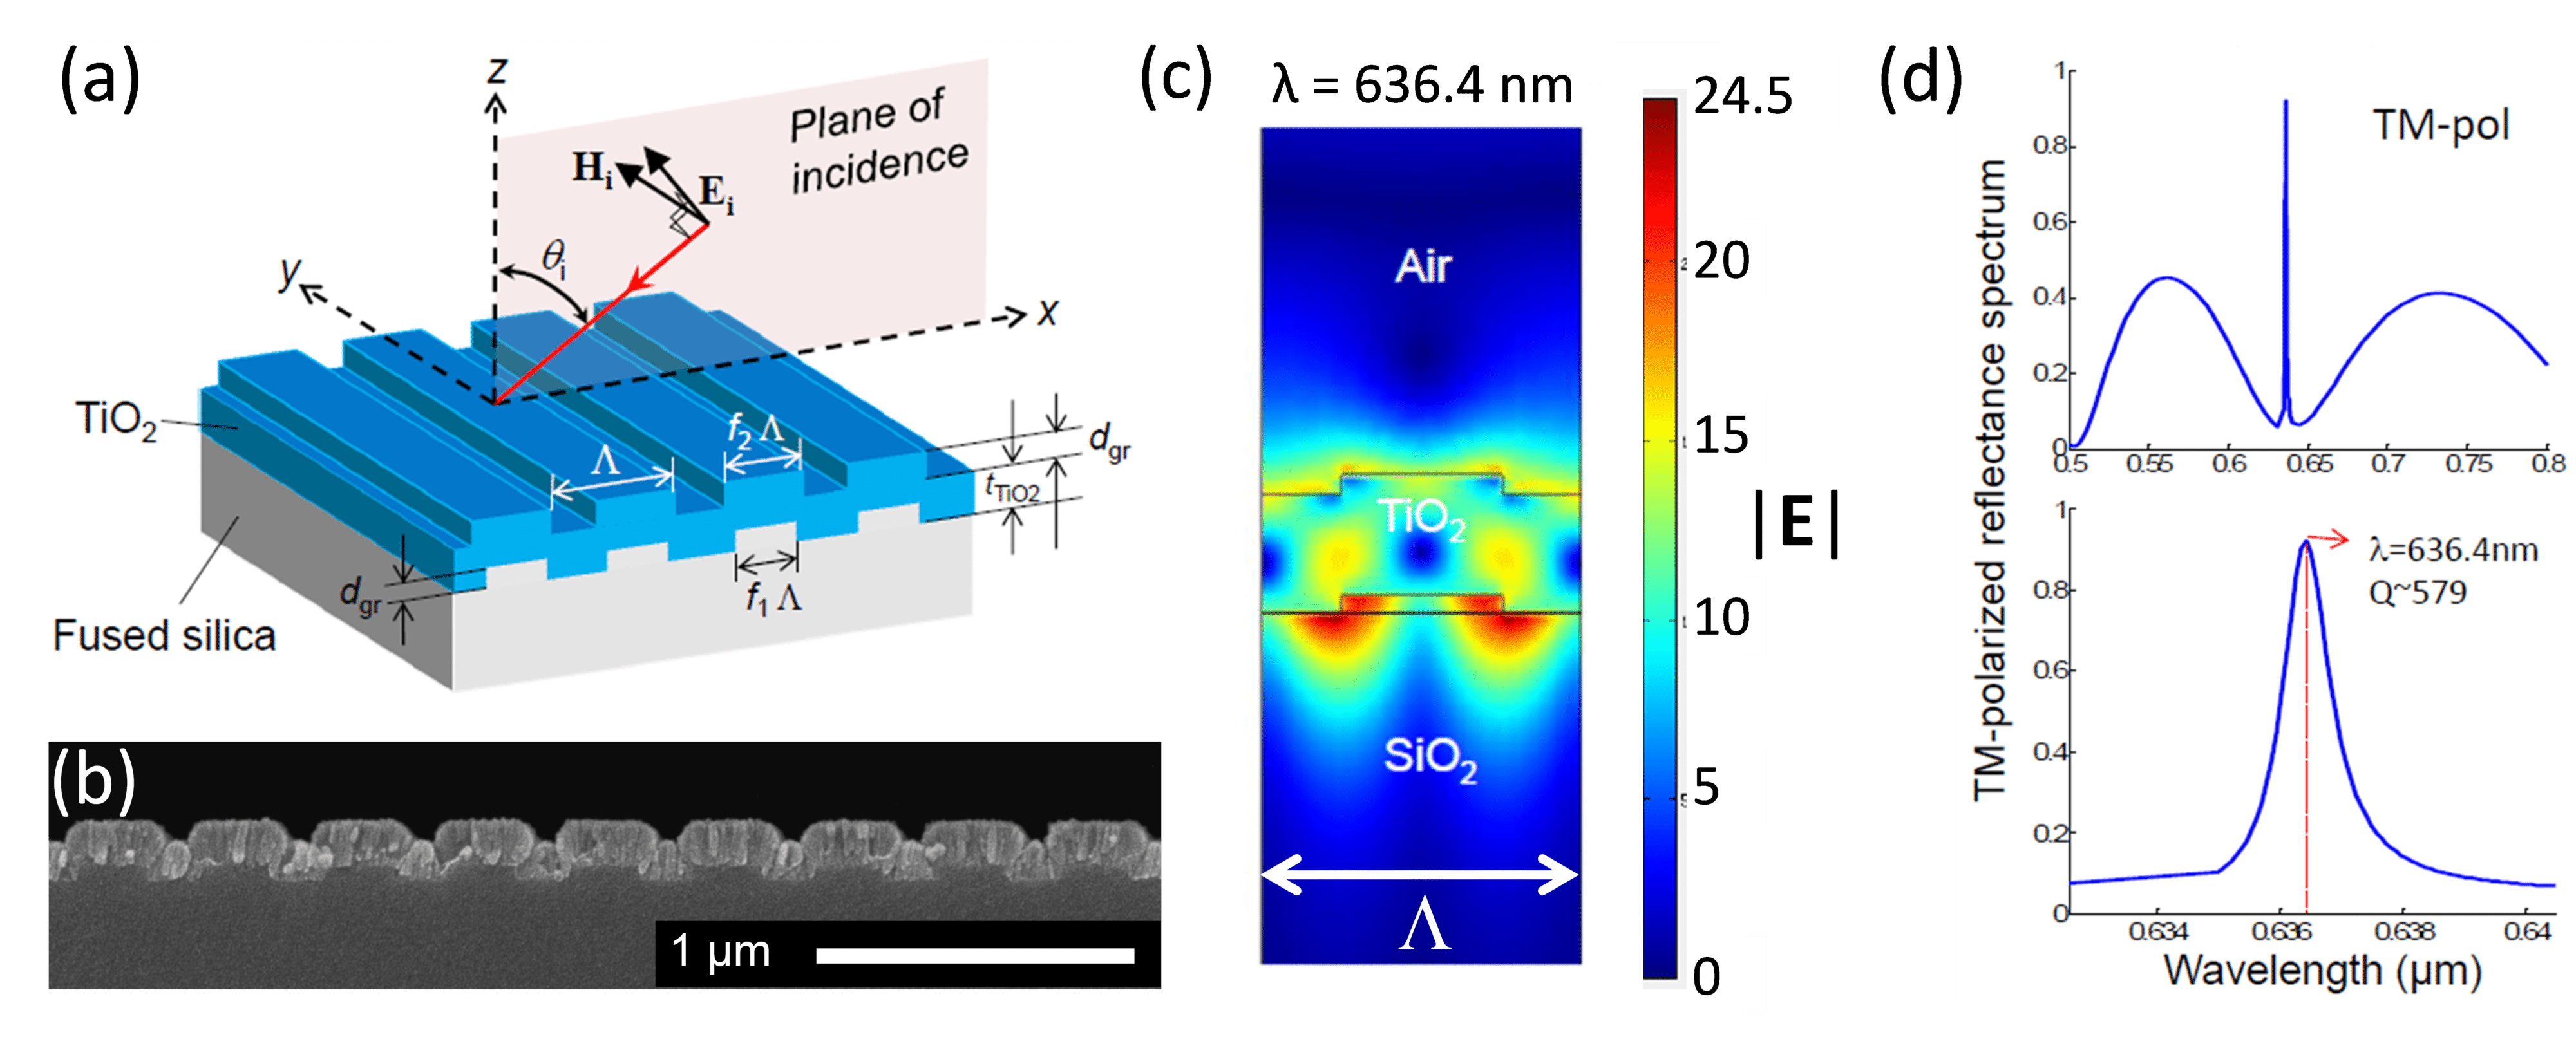 Optical-Guided-mode-resonance-photonic-crystal-sensor-optical-sim-SimuTech-Group